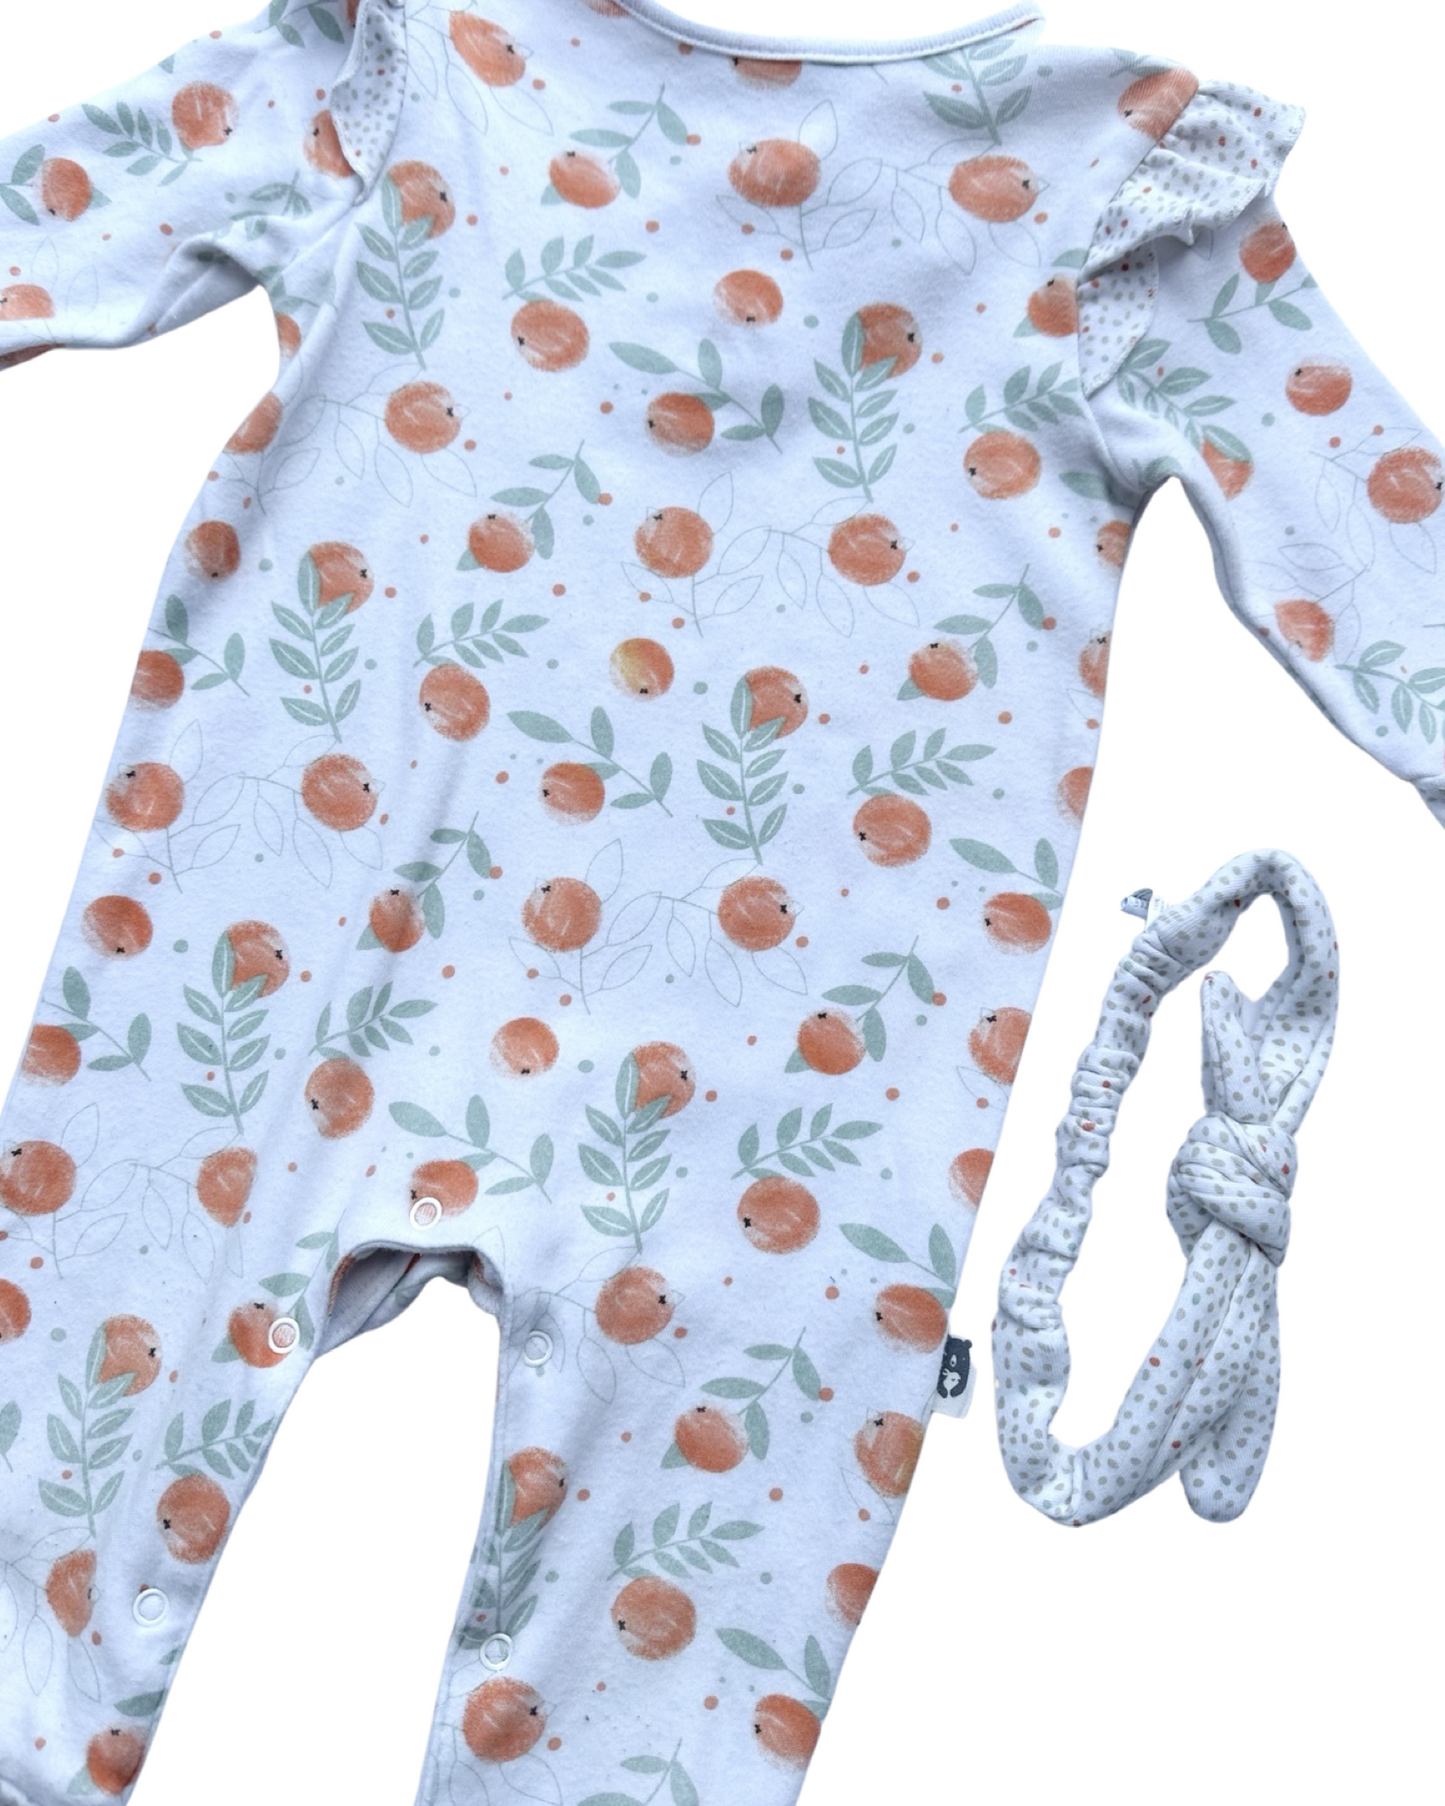 Rabbit & Bear peach print sleepsuit with matching headband (size 6-9mths)